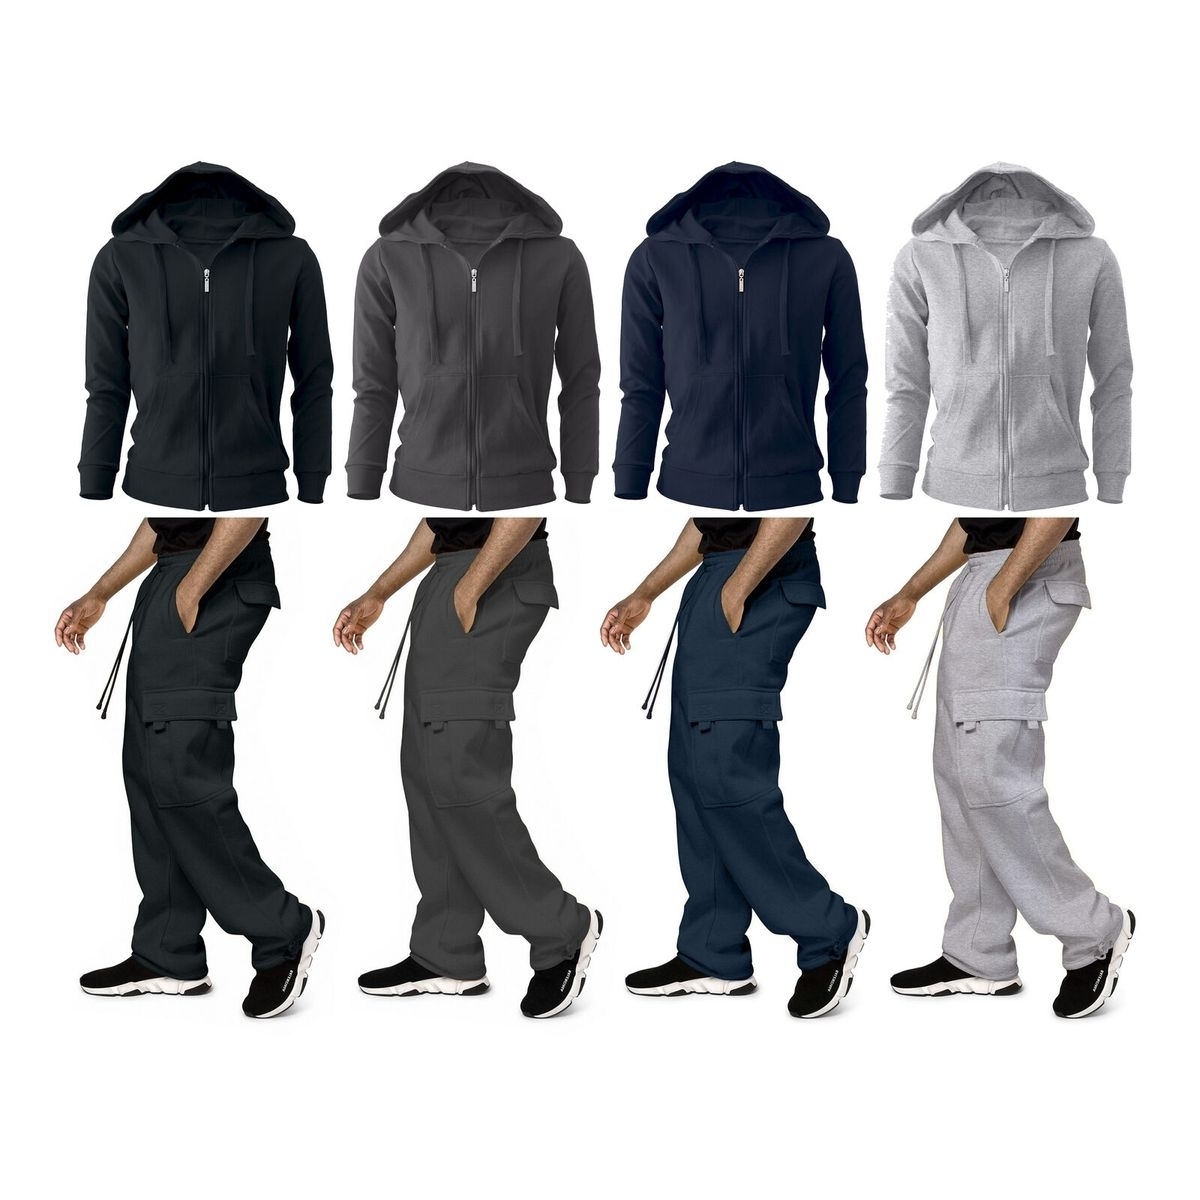 Multi-Pack: Men's Big & Tall Winter Warm Athletic Active Cozy Fleece Lined Multi-Pocket Full Zip Up Cargo Tracksuit - Black, 1-pack, Medium